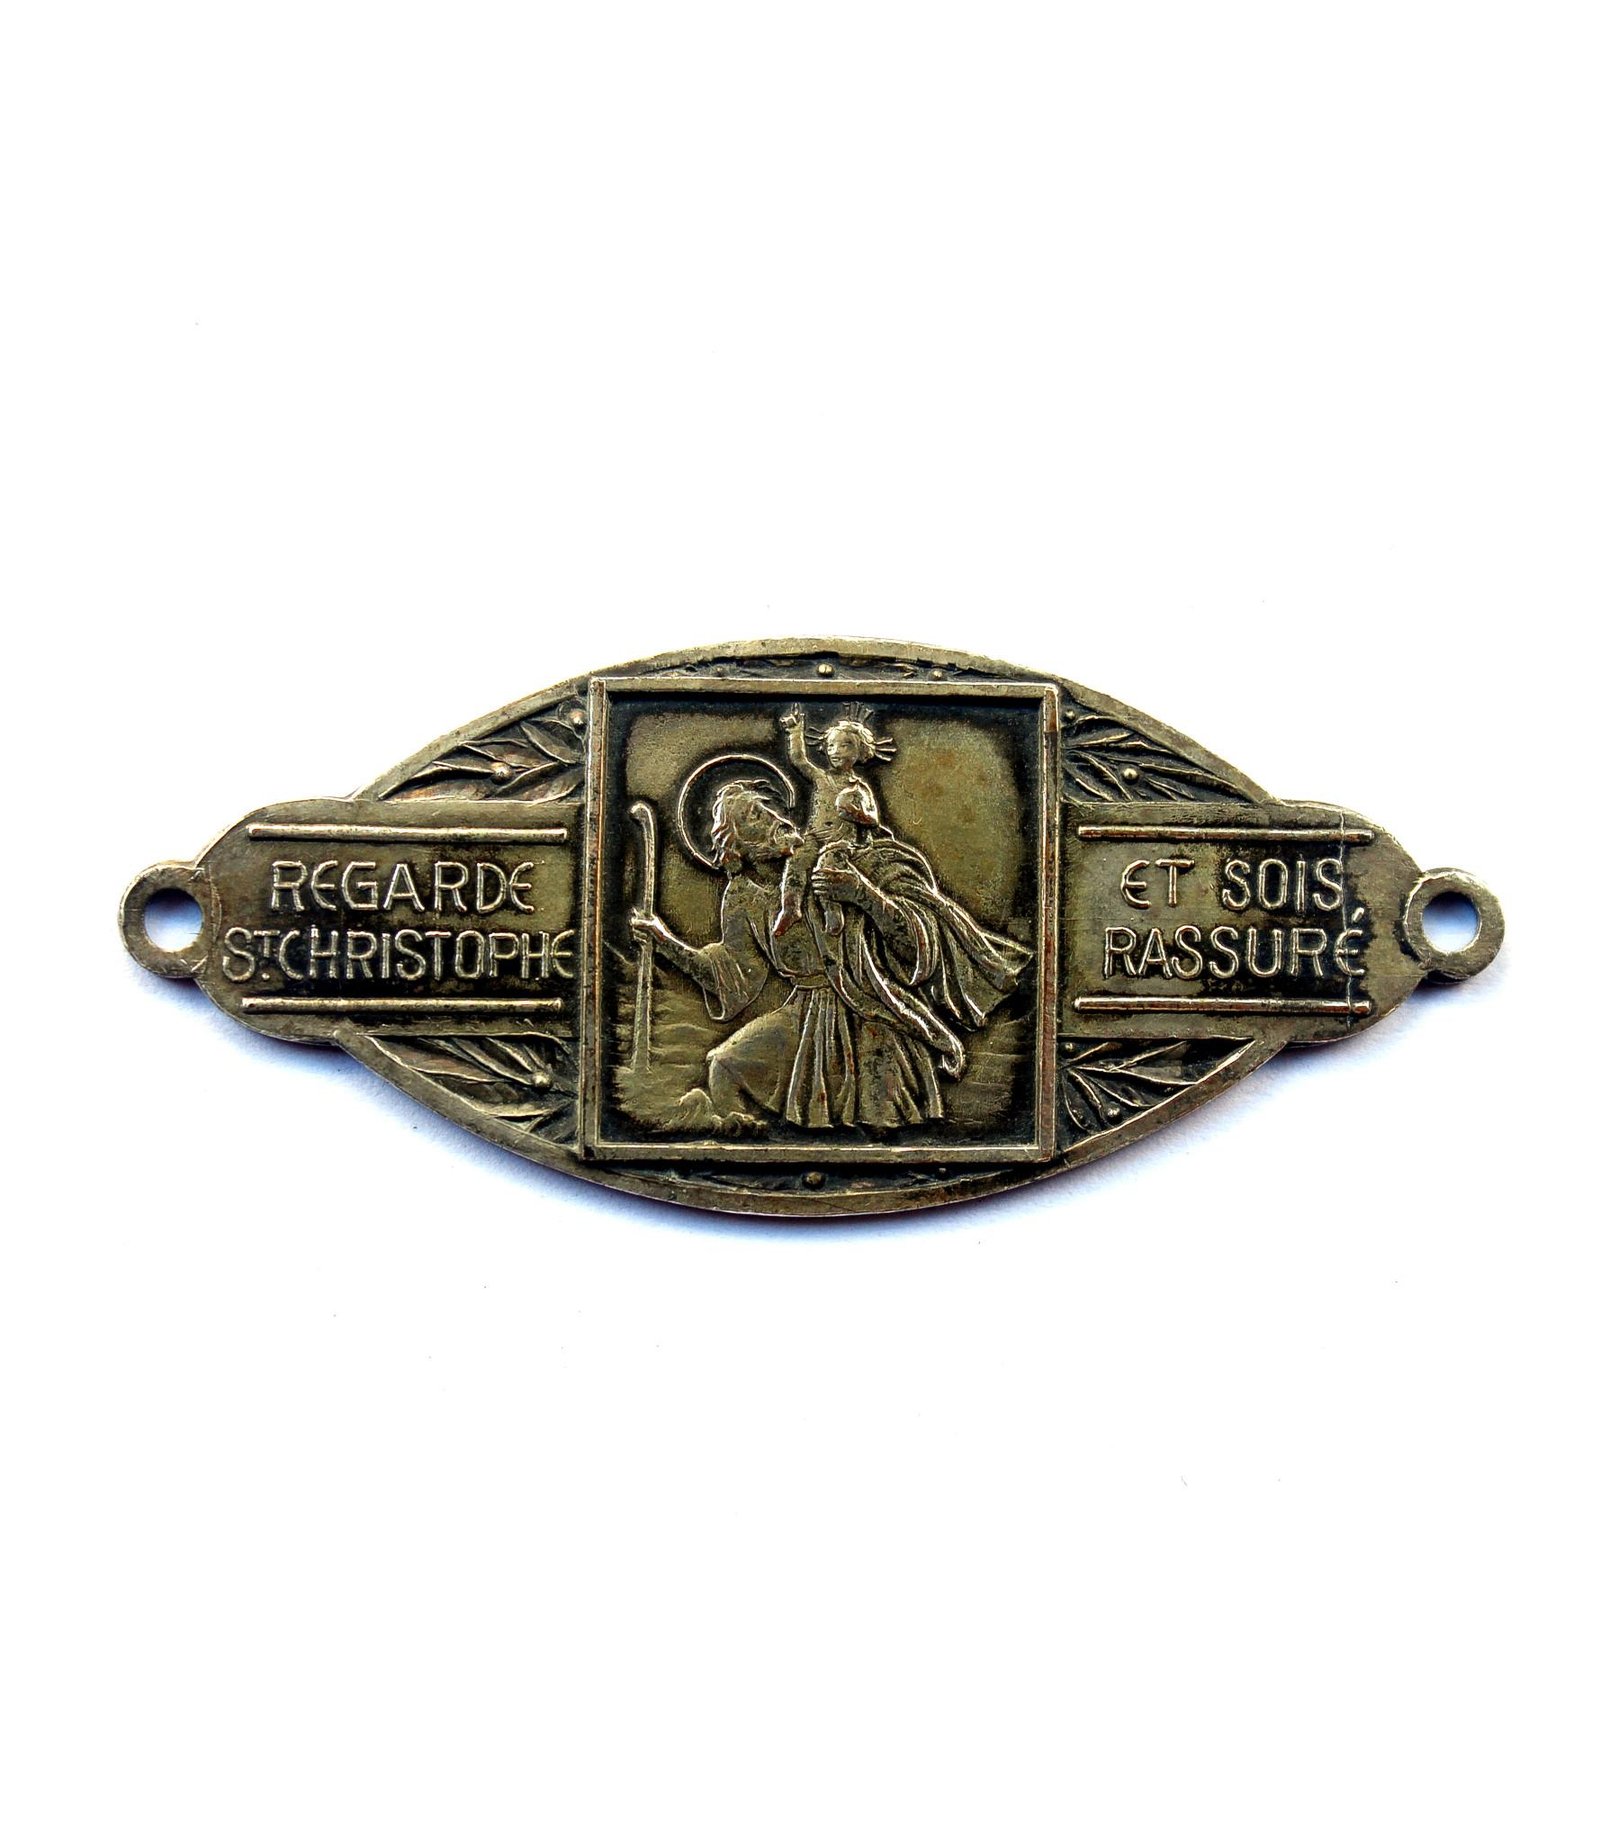 Saint Christopher badge